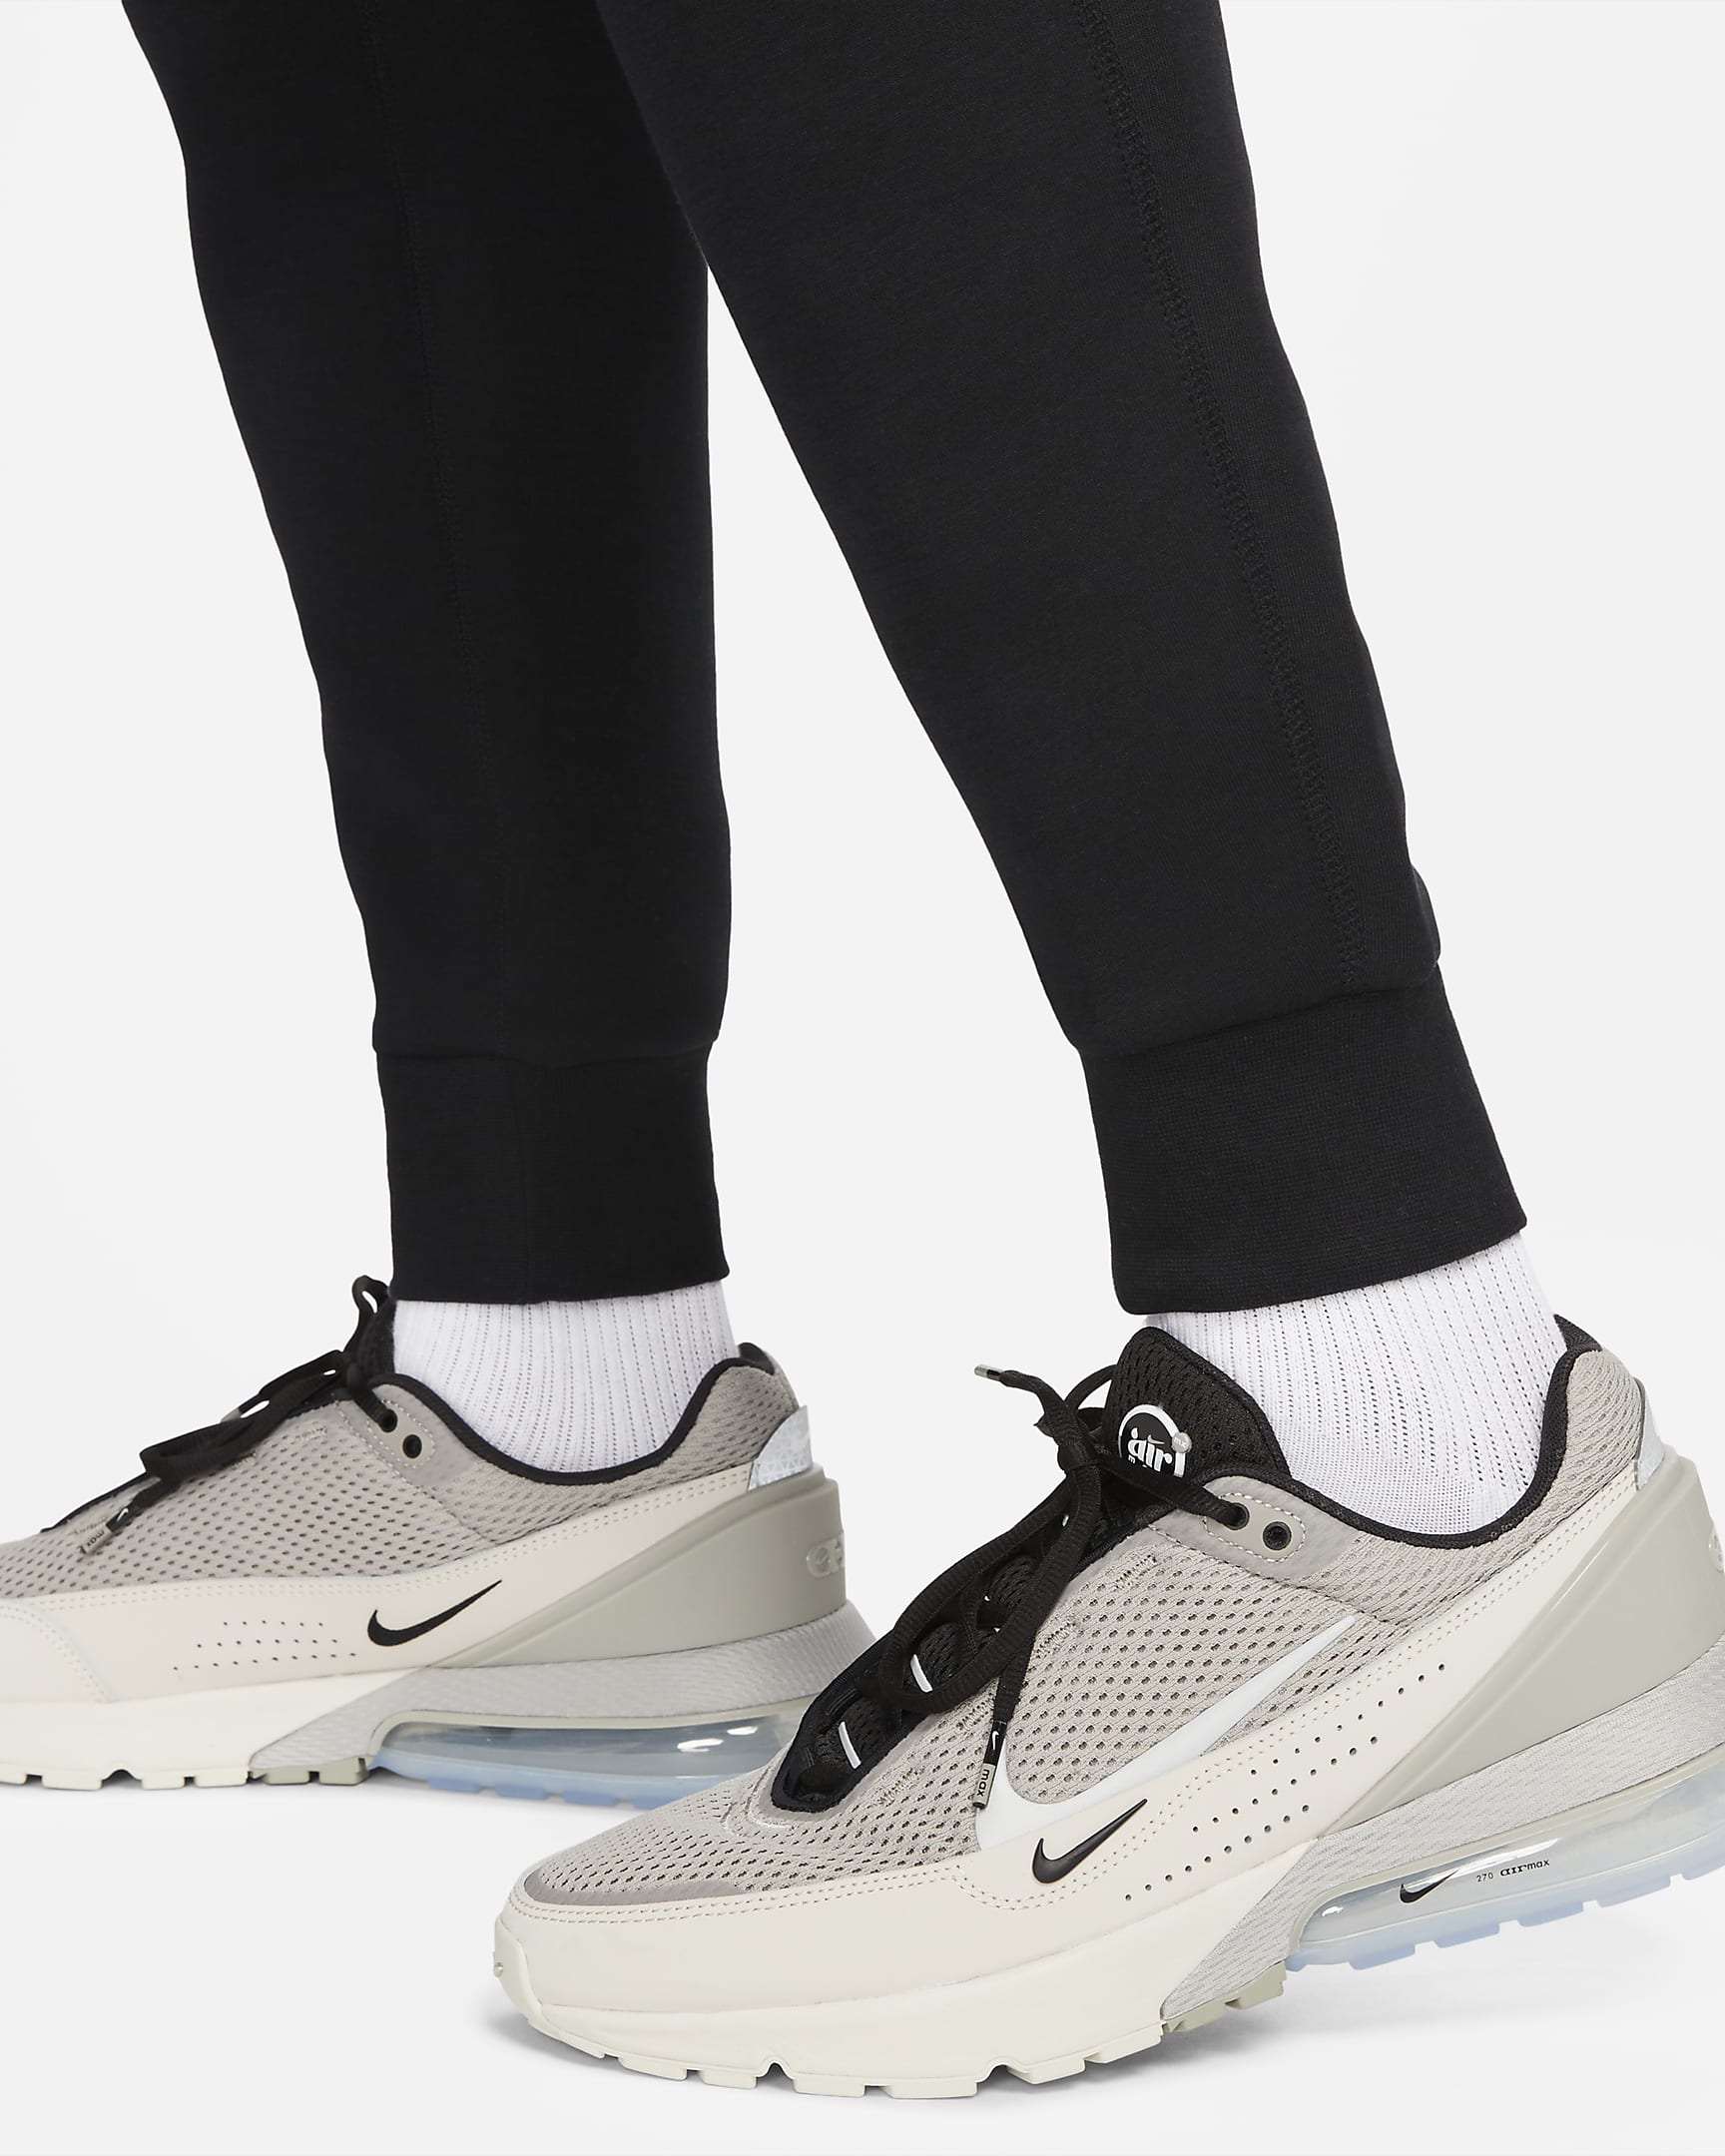 Nike Sportswear Tech Fleece Jogger - Hombre - Negro/Negro